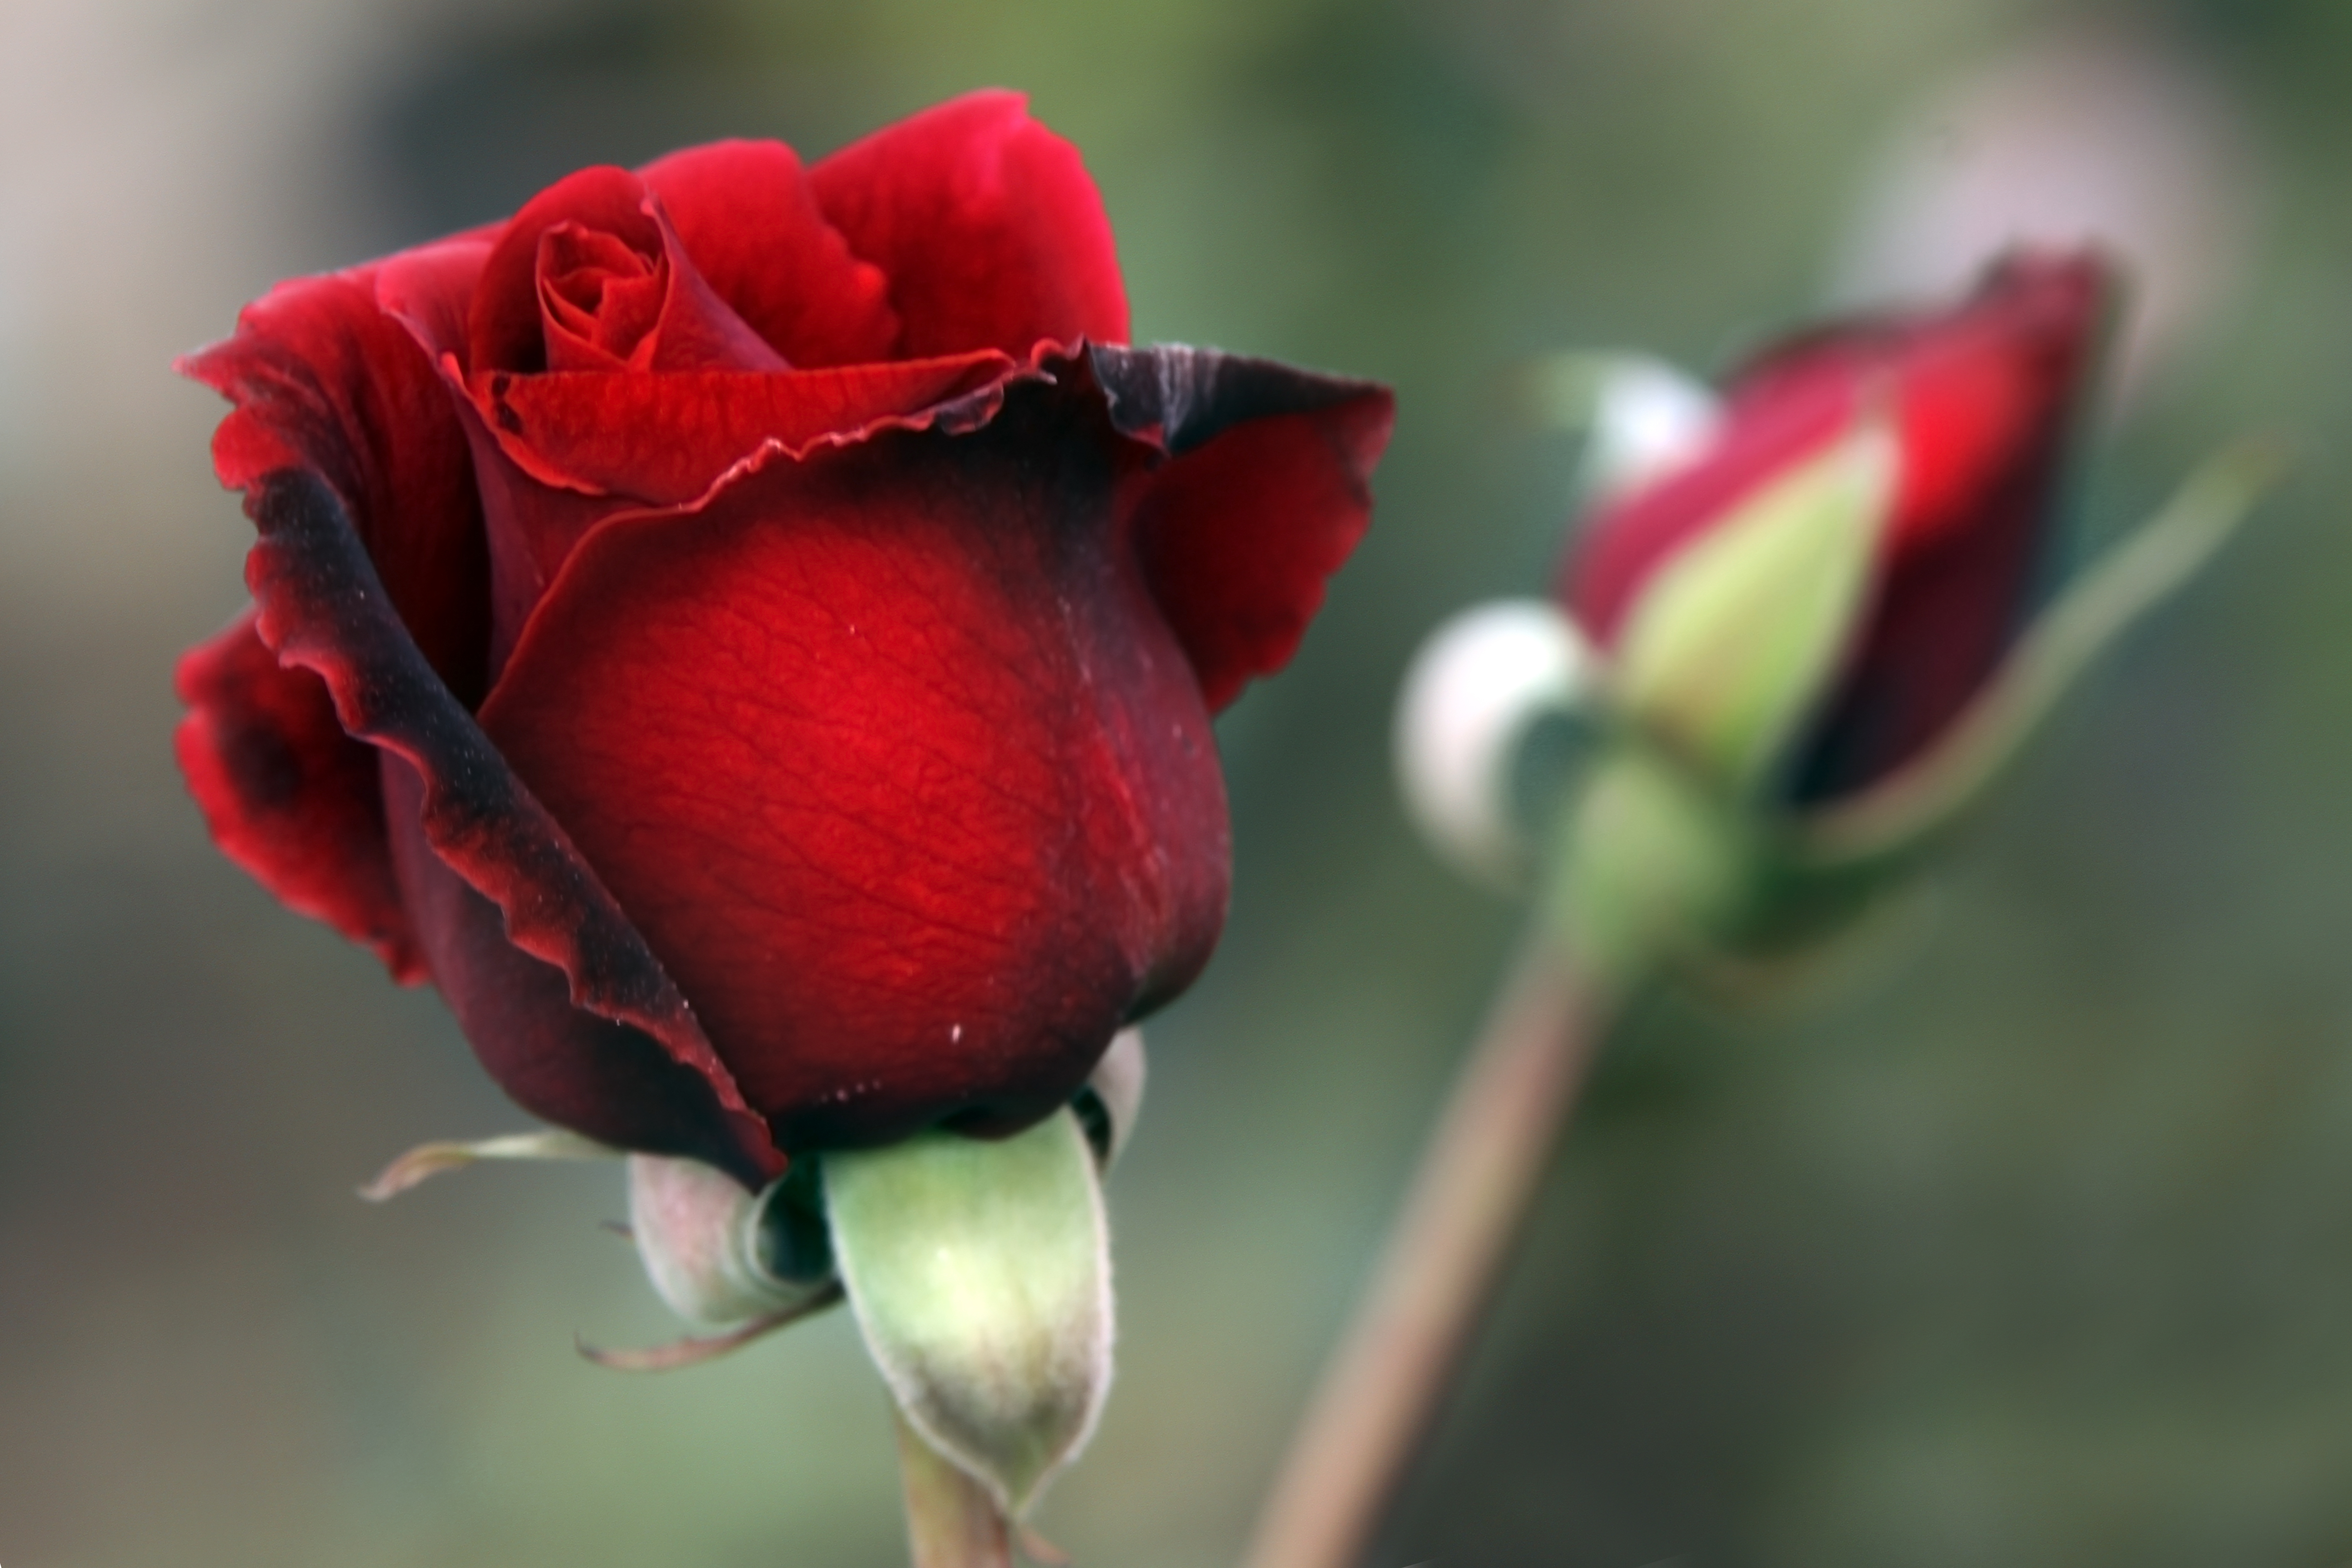 Rose is beautiful. Ред ред Роуз.